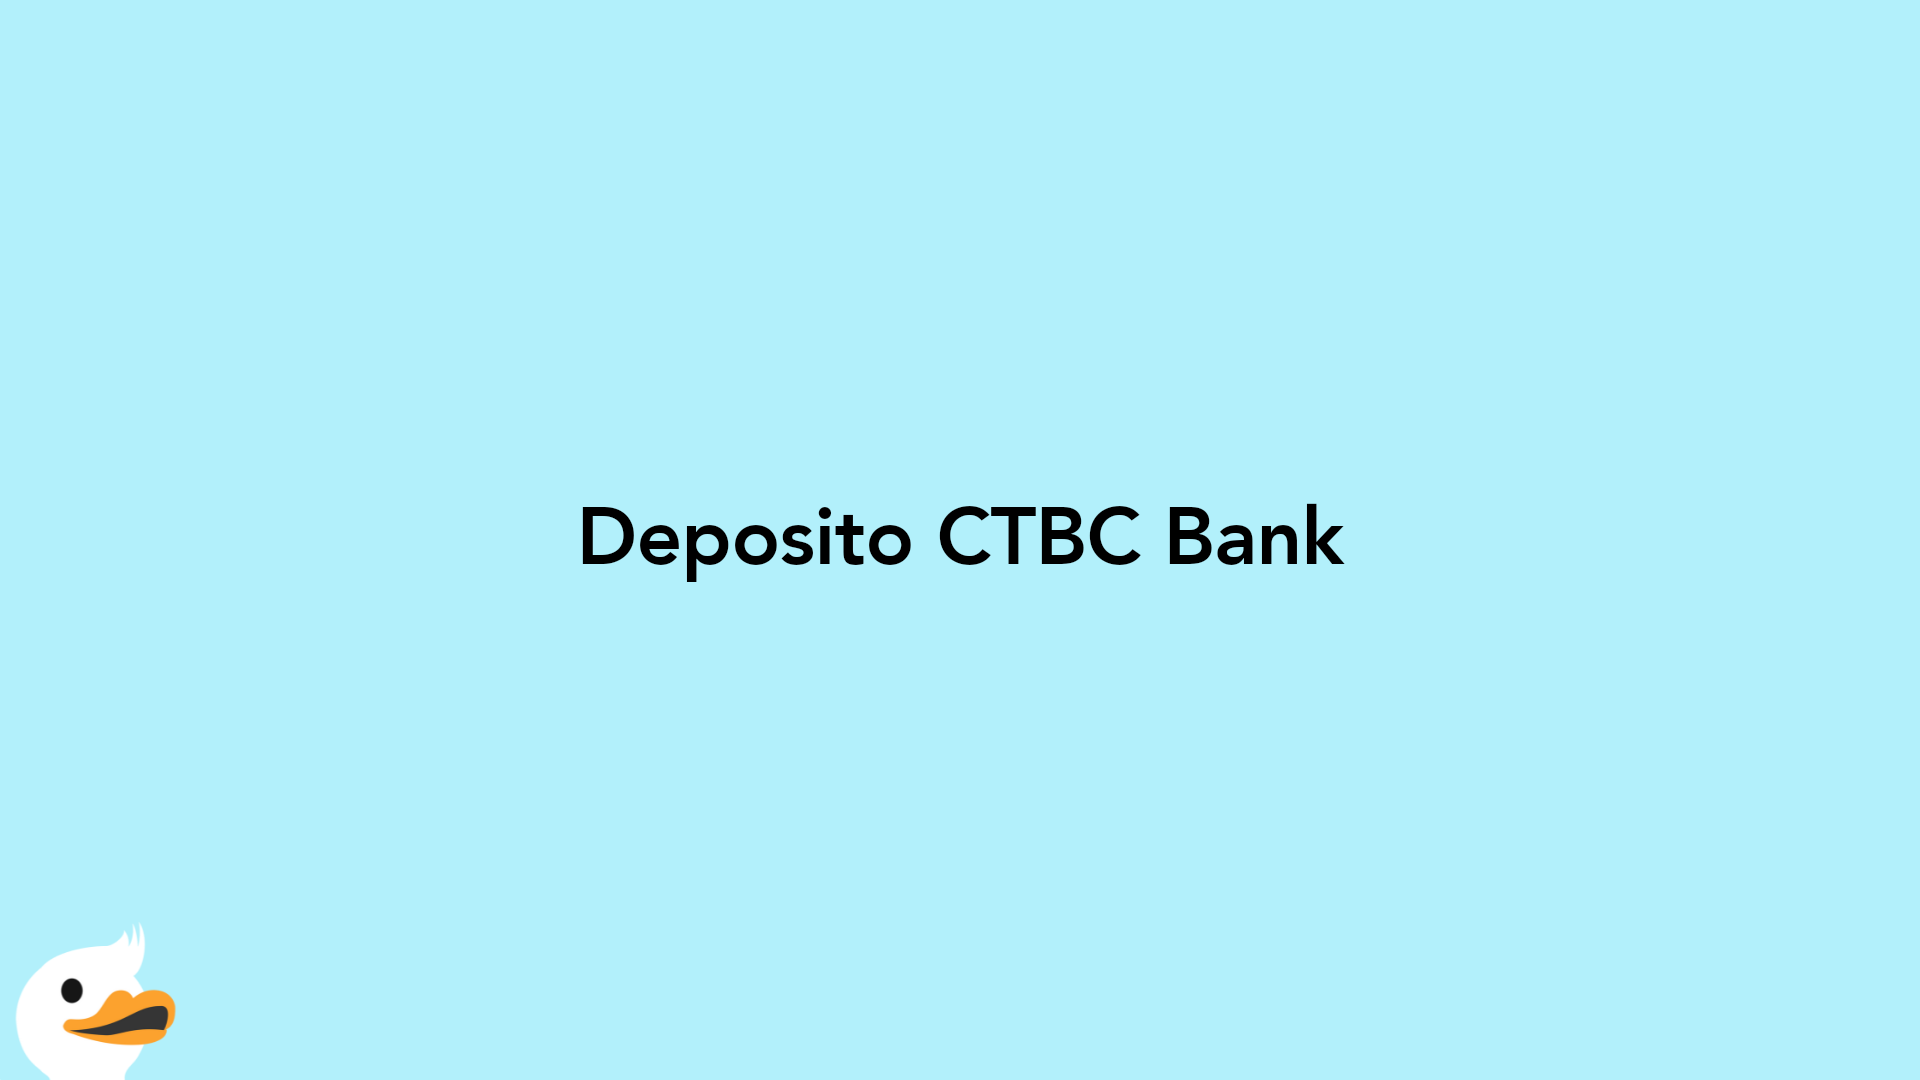 Deposito CTBC Bank